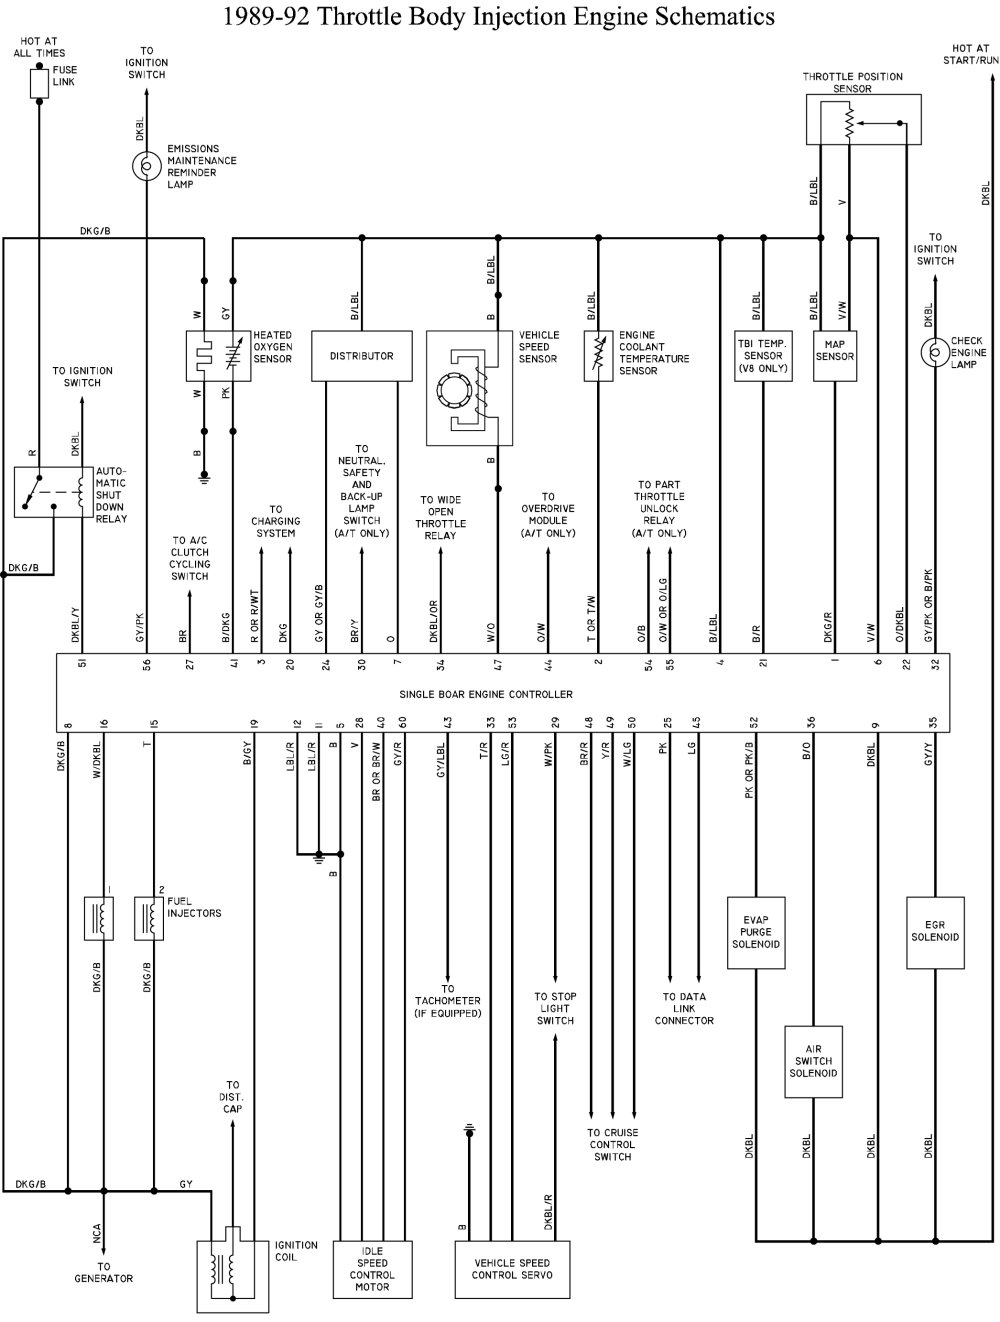 1993 dodge w250 wiring diagram